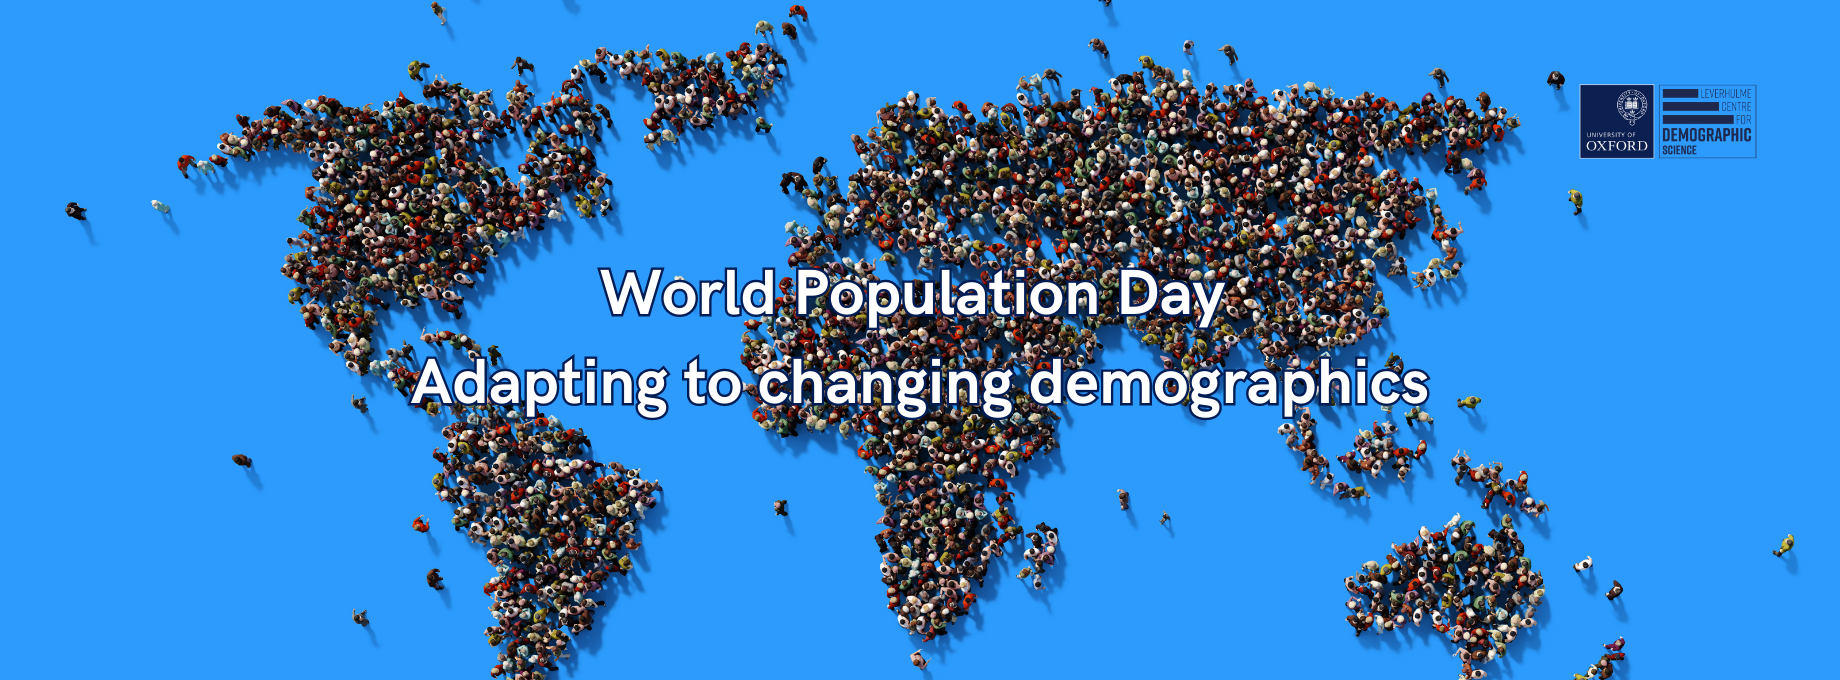 World Population Day visual